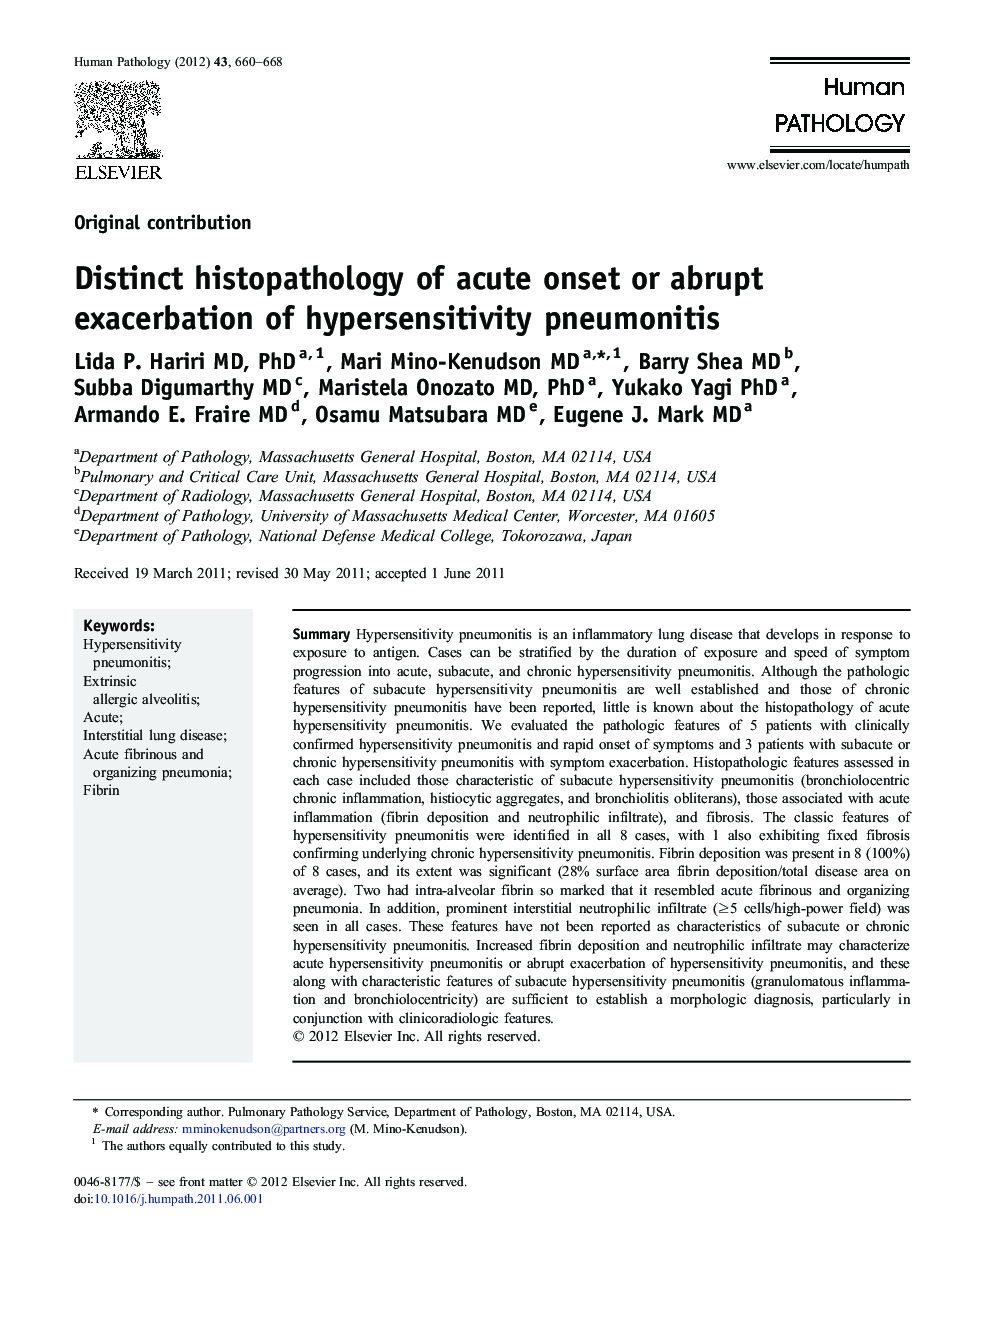 Distinct histopathology of acute onset or abrupt exacerbation of hypersensitivity pneumonitis